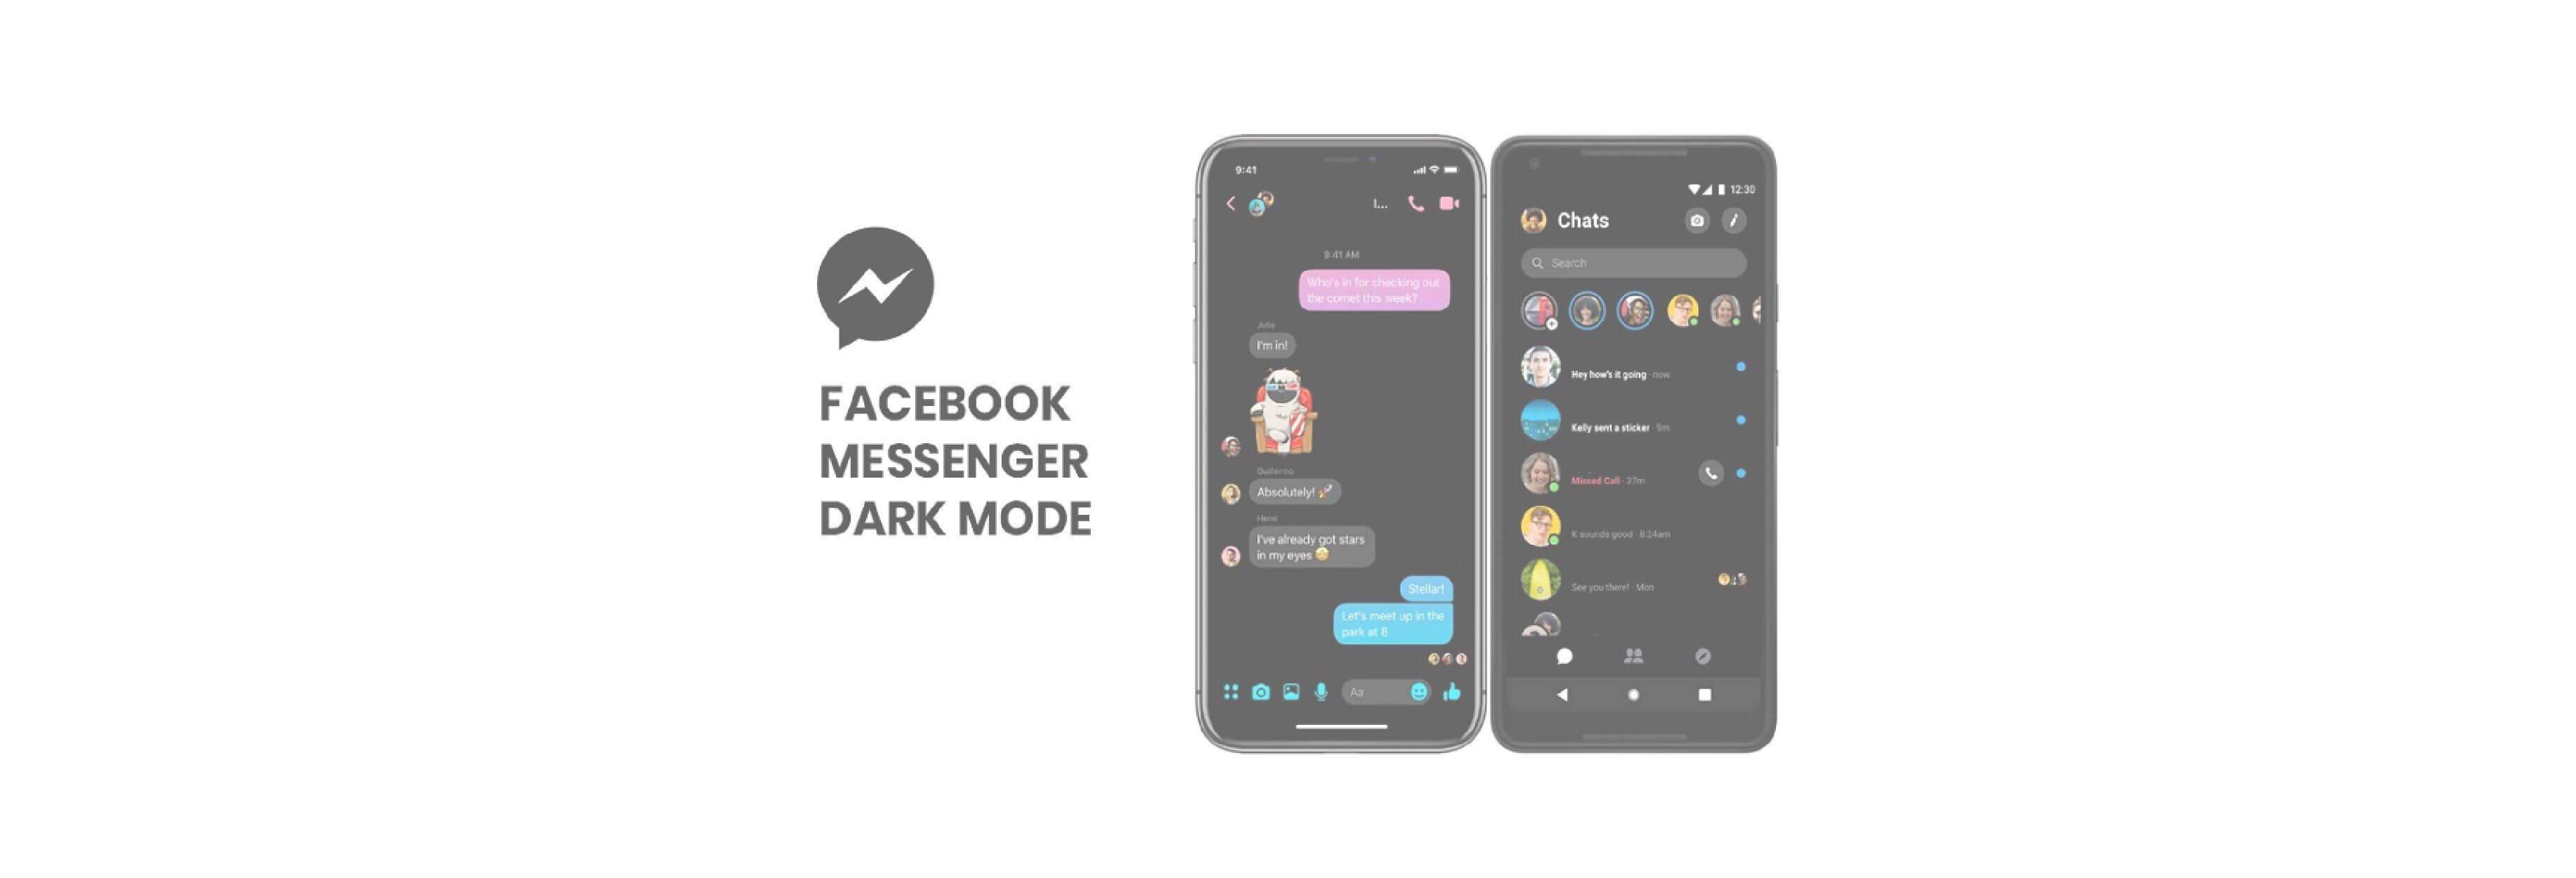 How to enable the hidden Dark Mode on Facebook Messenger